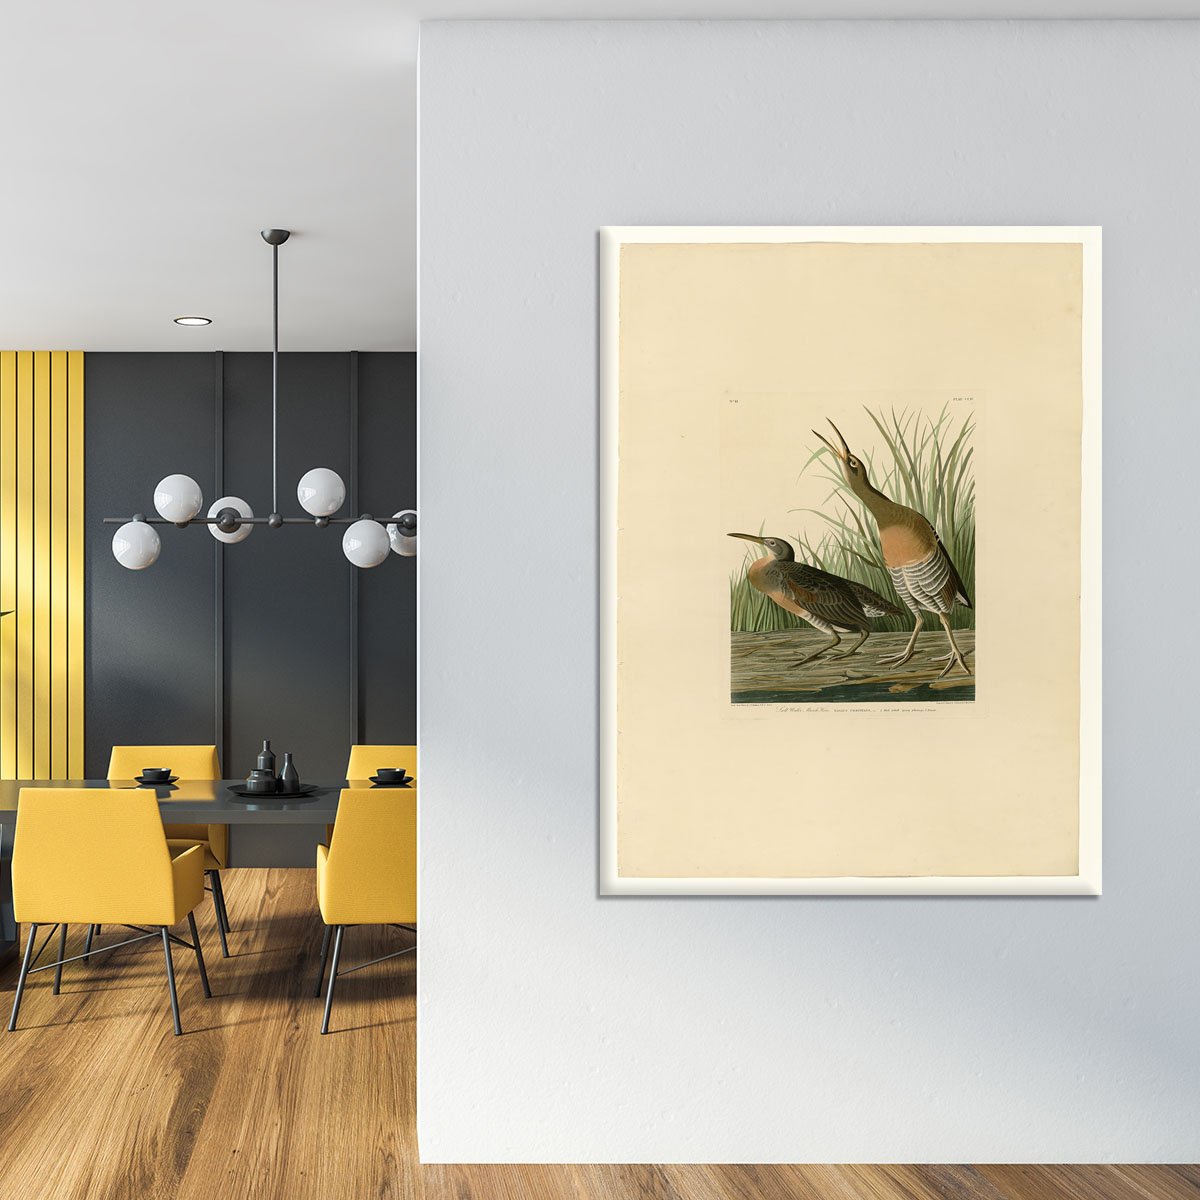 Salt Water Marsh Hen by Audubon Canvas Print or Poster